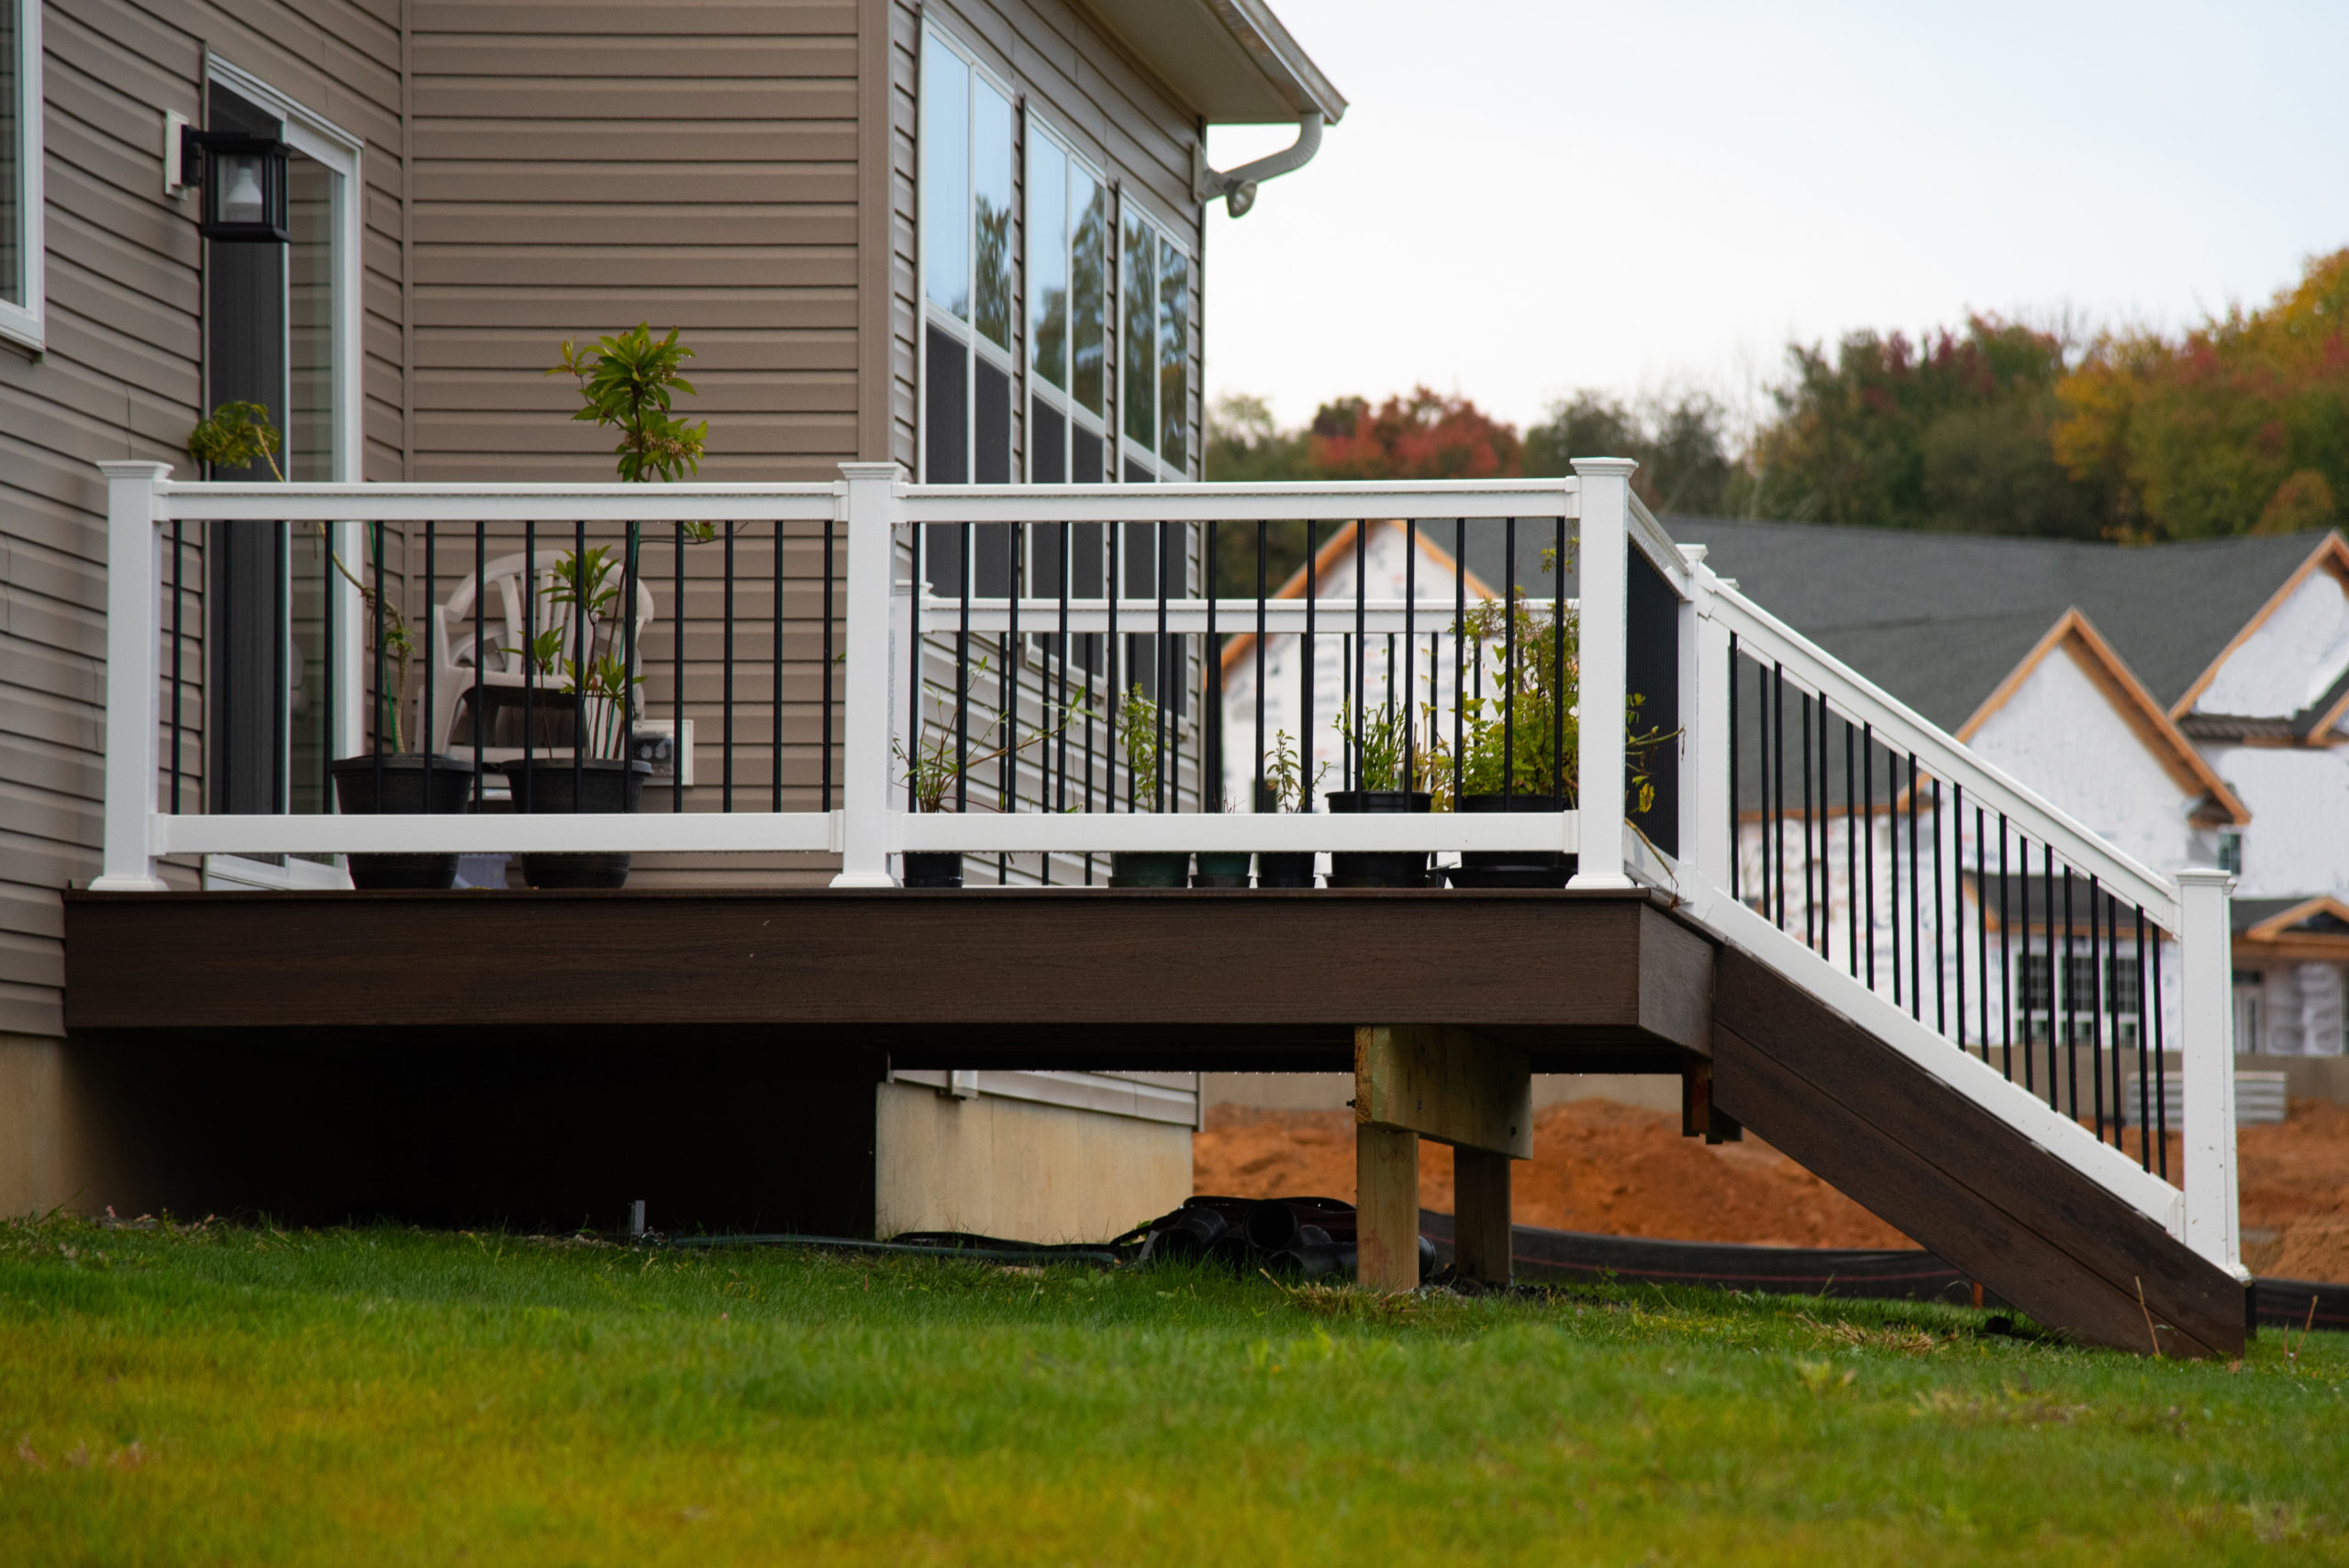 White veranda and railing posts porch wall new deck